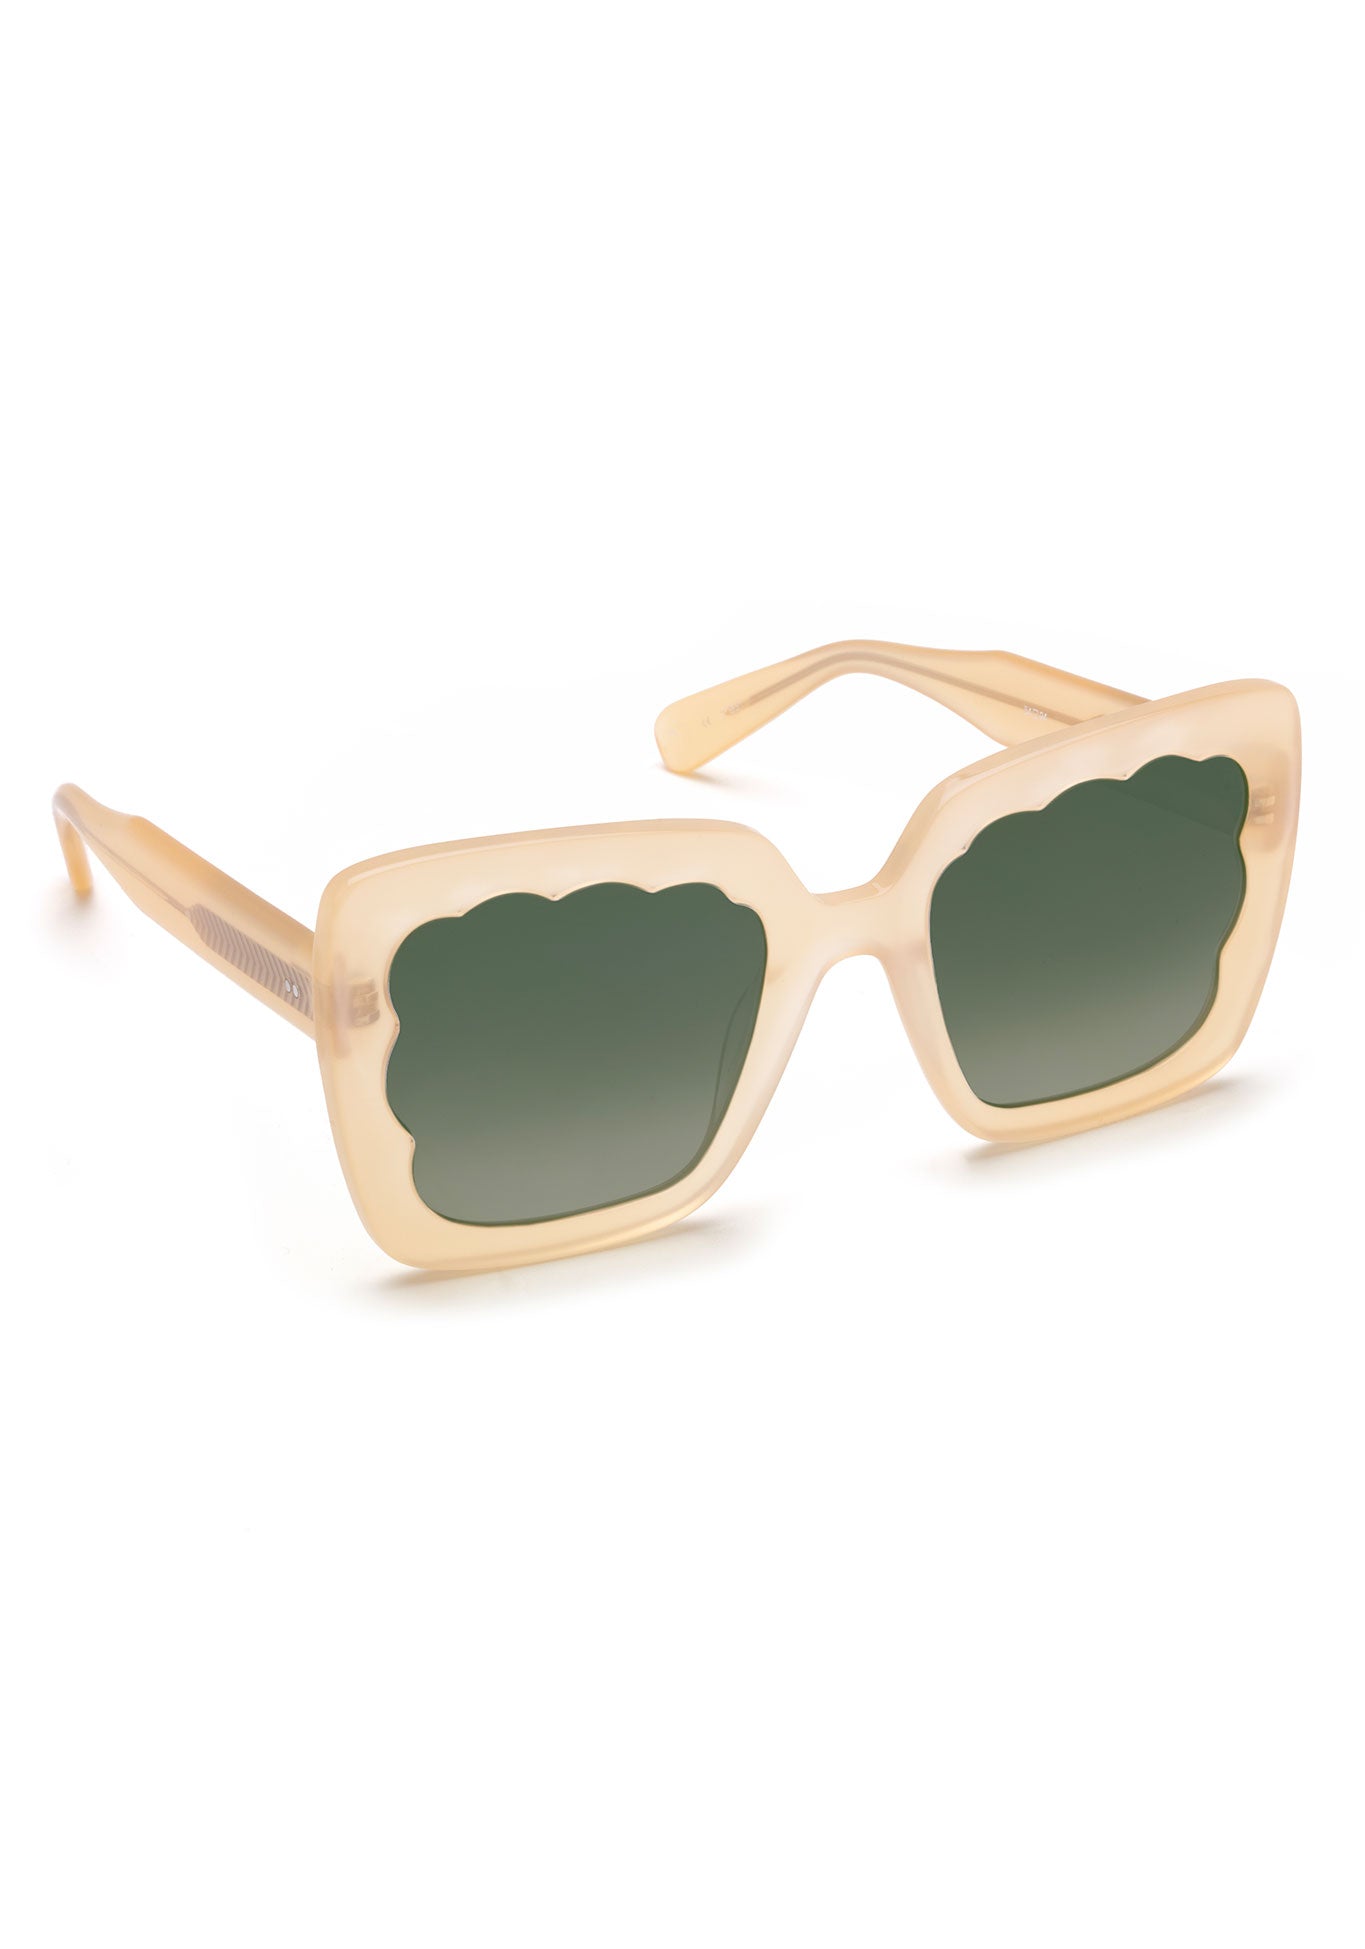 KREWE SUNGLASSES - ELIZABETH | Iridescent Blonde Mirrored luxury, handcrafted blonde acetate scalloped sunglasses